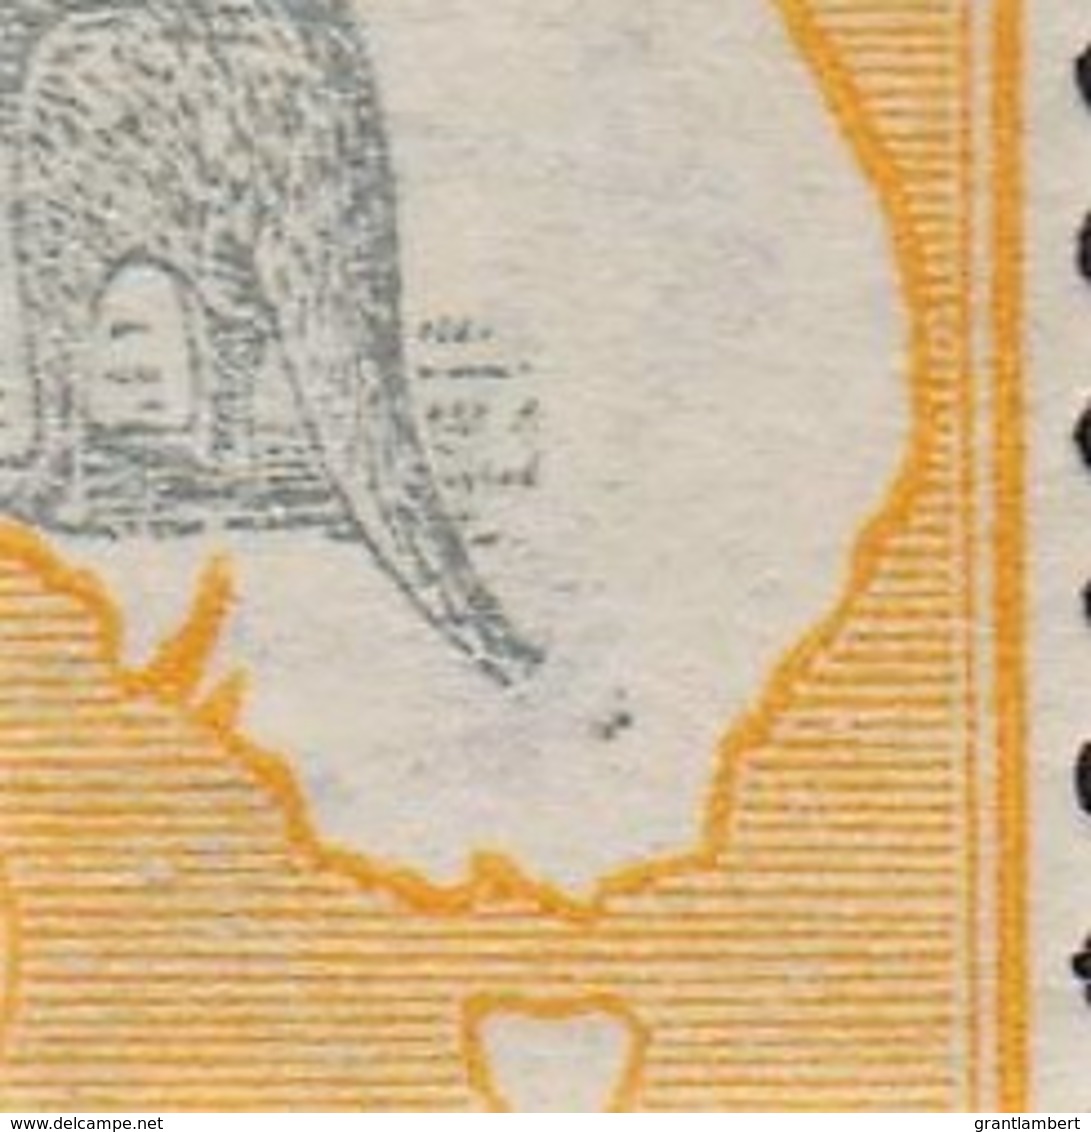 Australia 1913 Kangaroo 5/- Grey & Yellow 1st Wmk MH - Broken Tail Variety - Mint Stamps